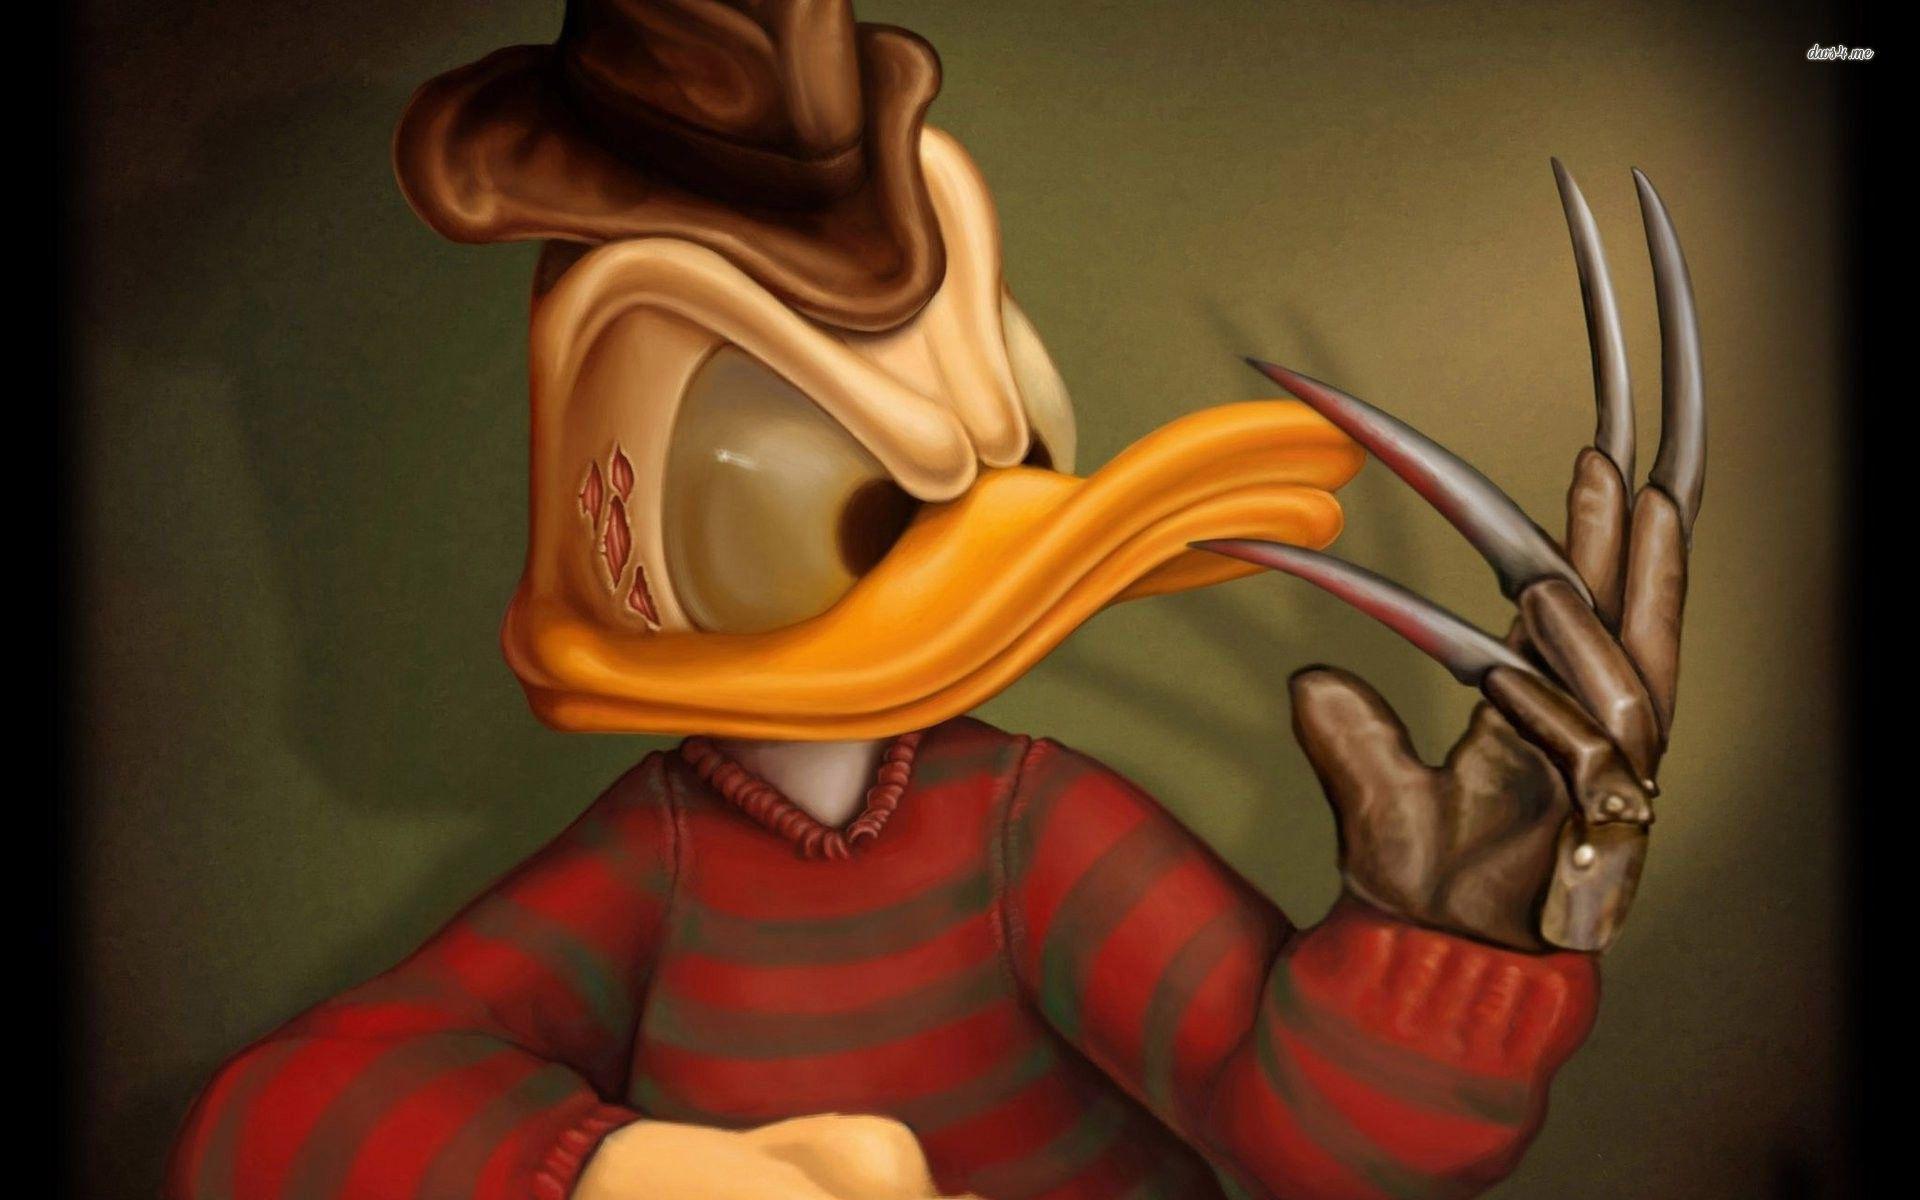 Donald duck as freddy krueger wallpapers